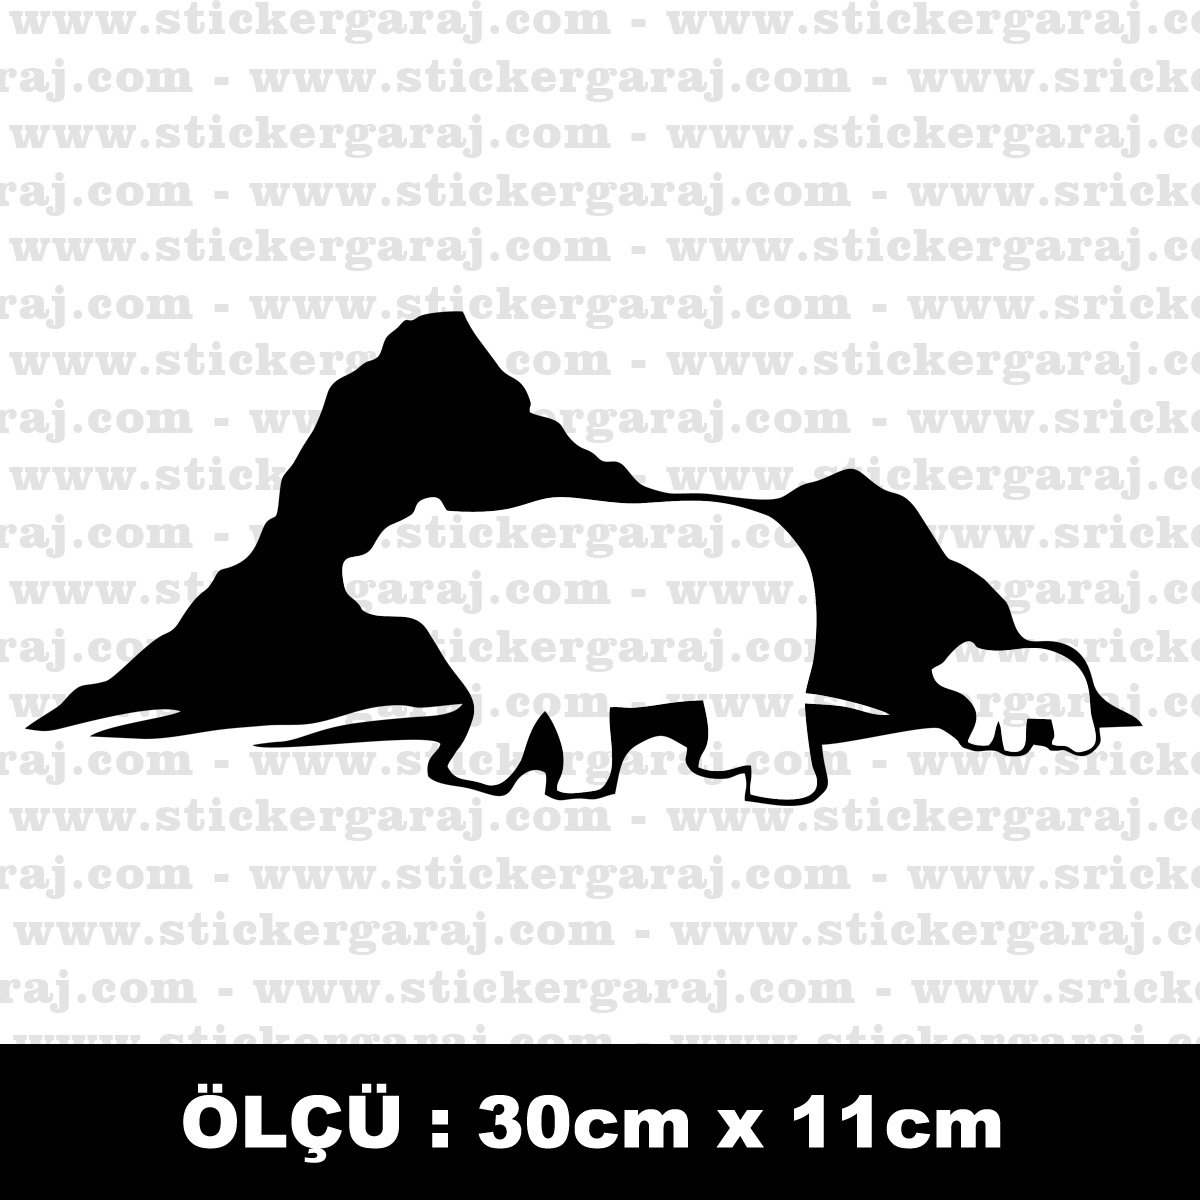 Kutup dag ayisi sticker - Kutup dağ ayısı sticker